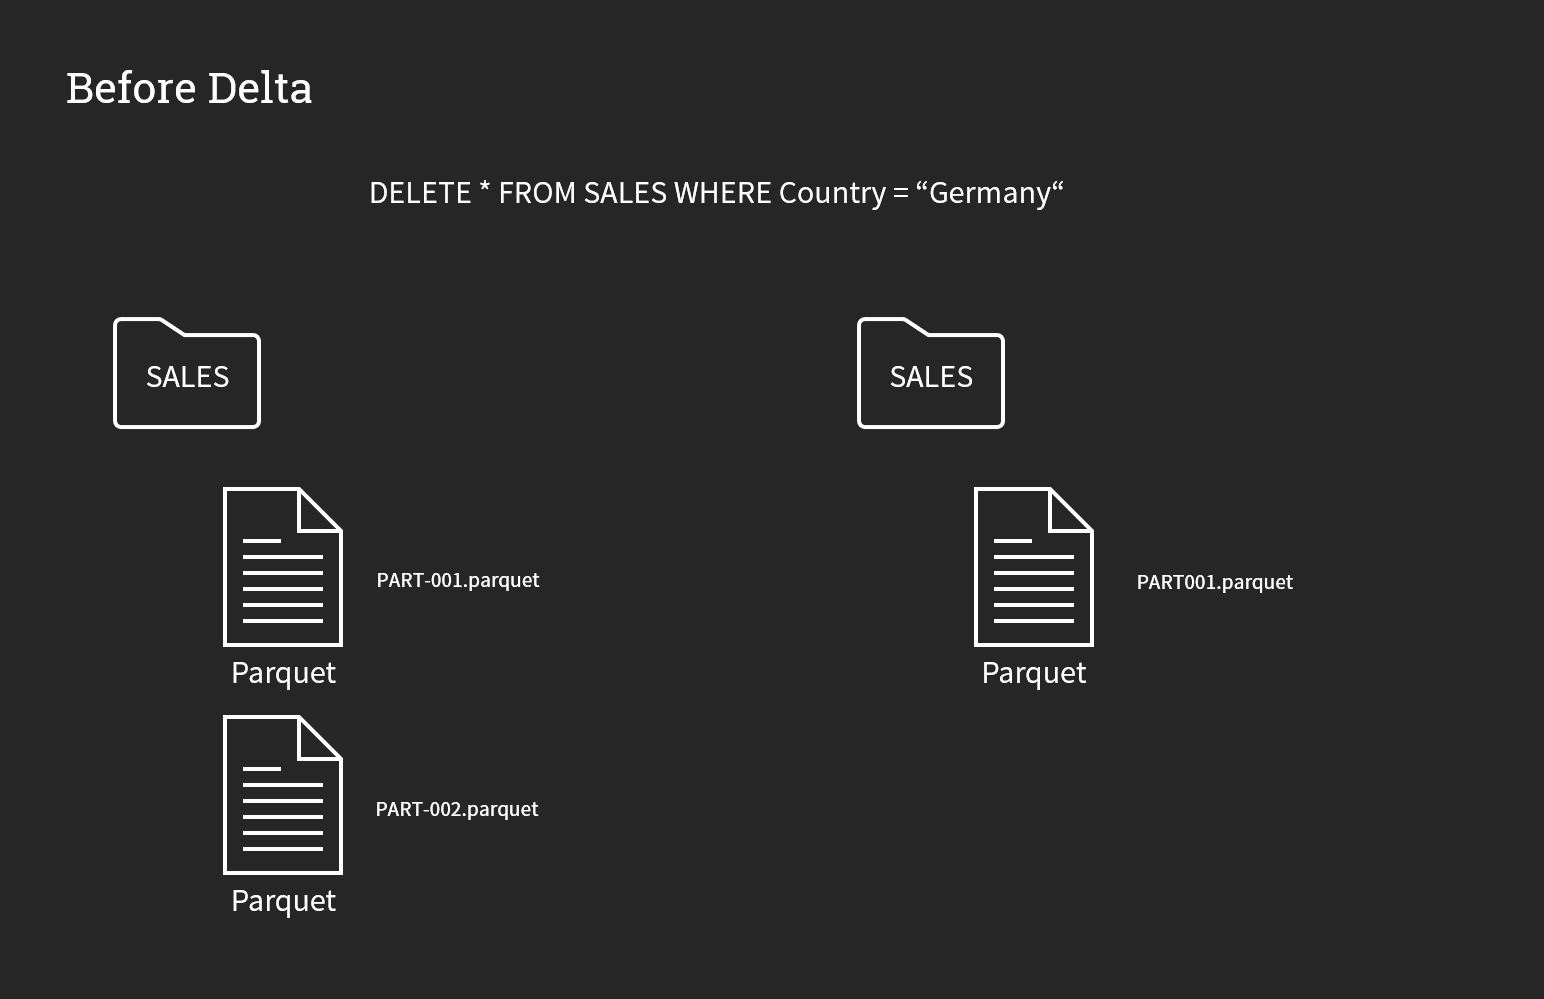 Before Delta: Folder structure